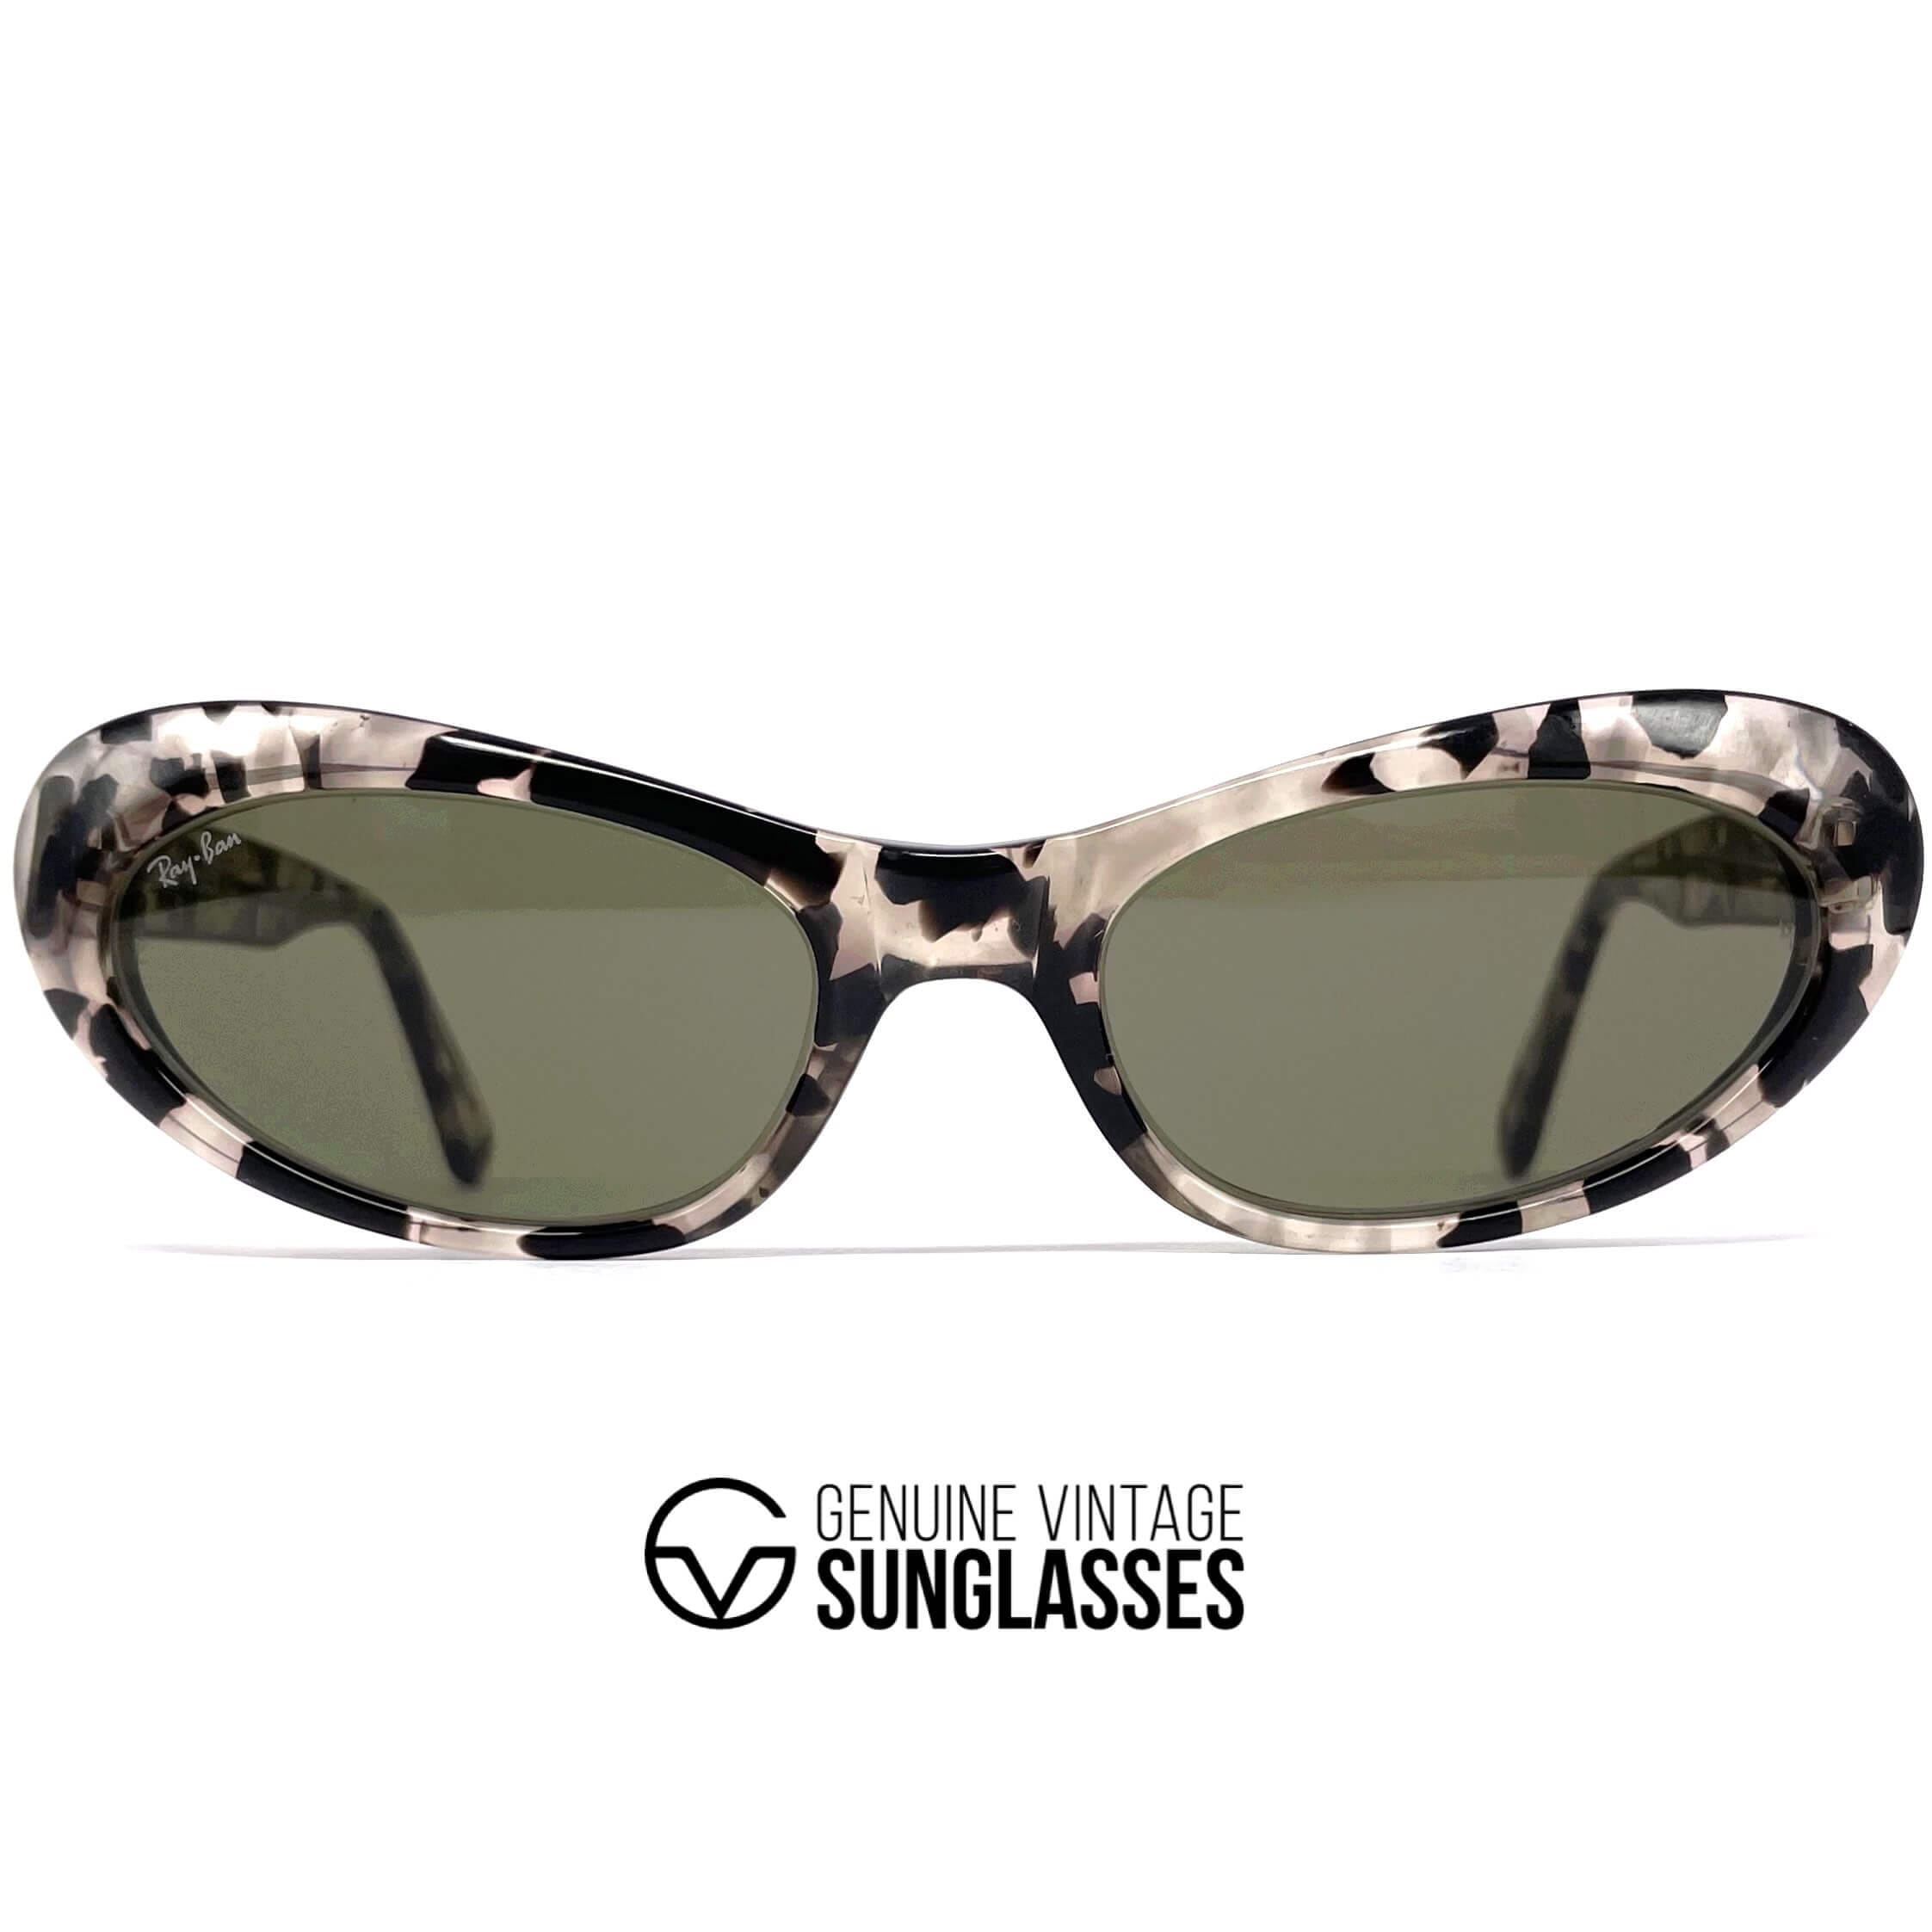 RAY-ban RITUALS sunglasses | eBay